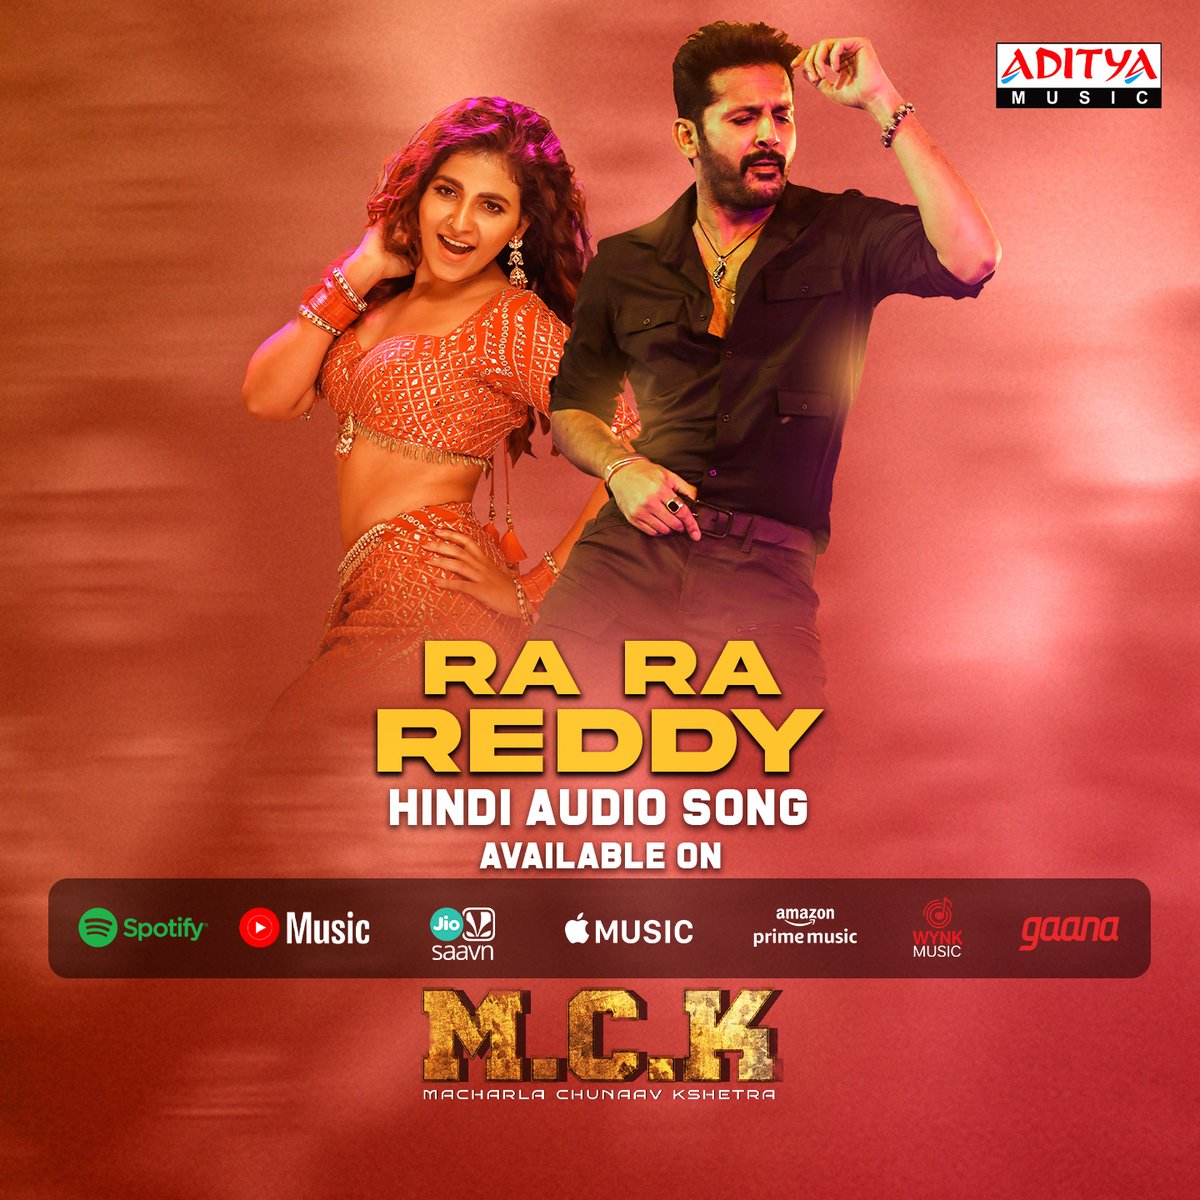 #RaRaReddy (Hindi) Audio Song is now available on all major music platforms! 🎶💃🕺

👉 bfan.link/Ra-Ra-Reddy-Hi…

#Nithiin #KrithiShetty #AdityaMusic #HarryAnand #CatherineTresa #MahatiSwaraSagar #TarannumMalikJain #AdityaMovies #Adityamusicgaane